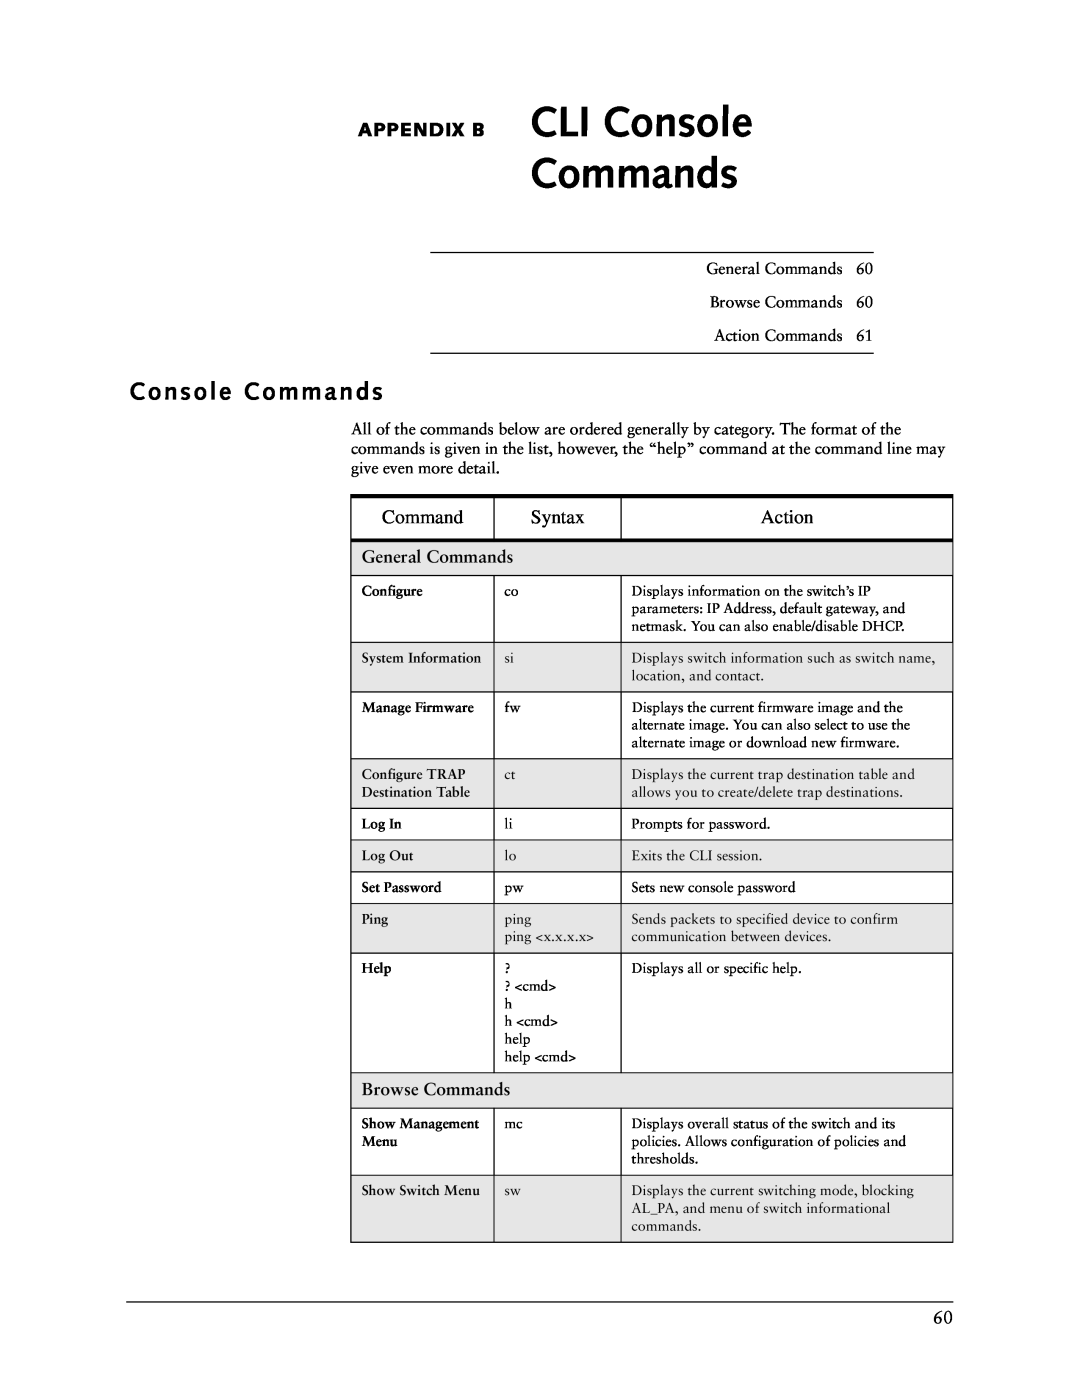 Vixel 335 manual Console Commands, APPENDIX B CLI Console, Syntax, Action, General Commands, Browse Commands 